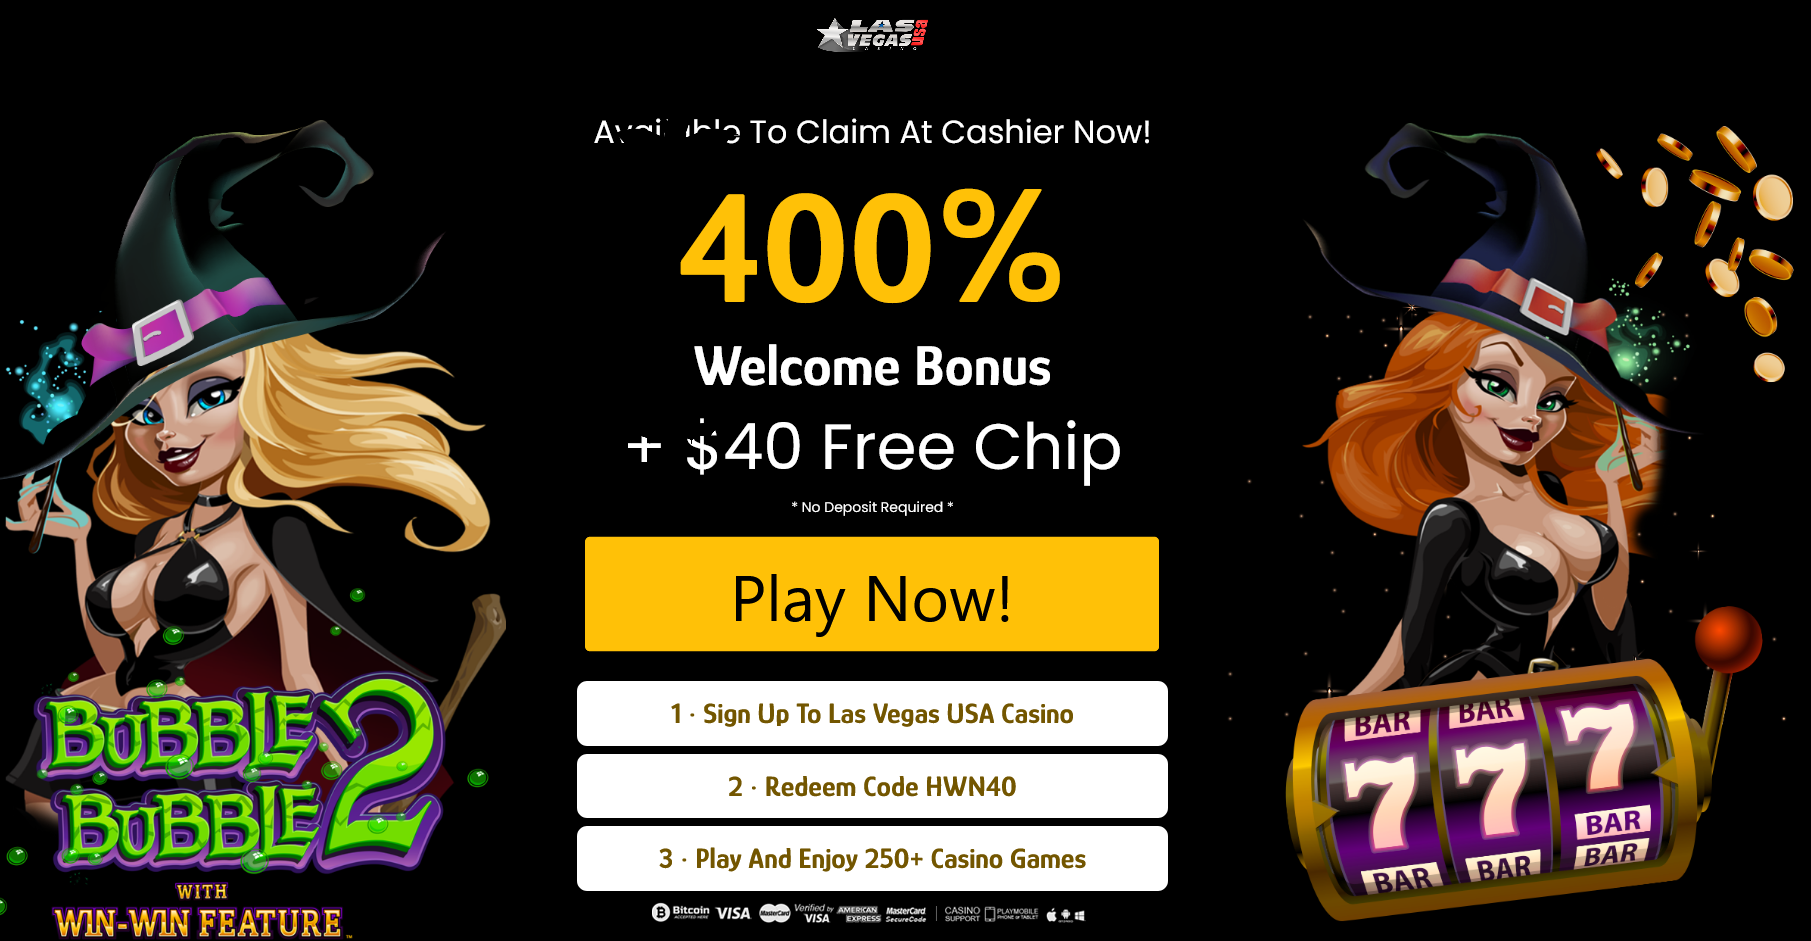 400% WELCOME BONUS + $40 FREE CHIP